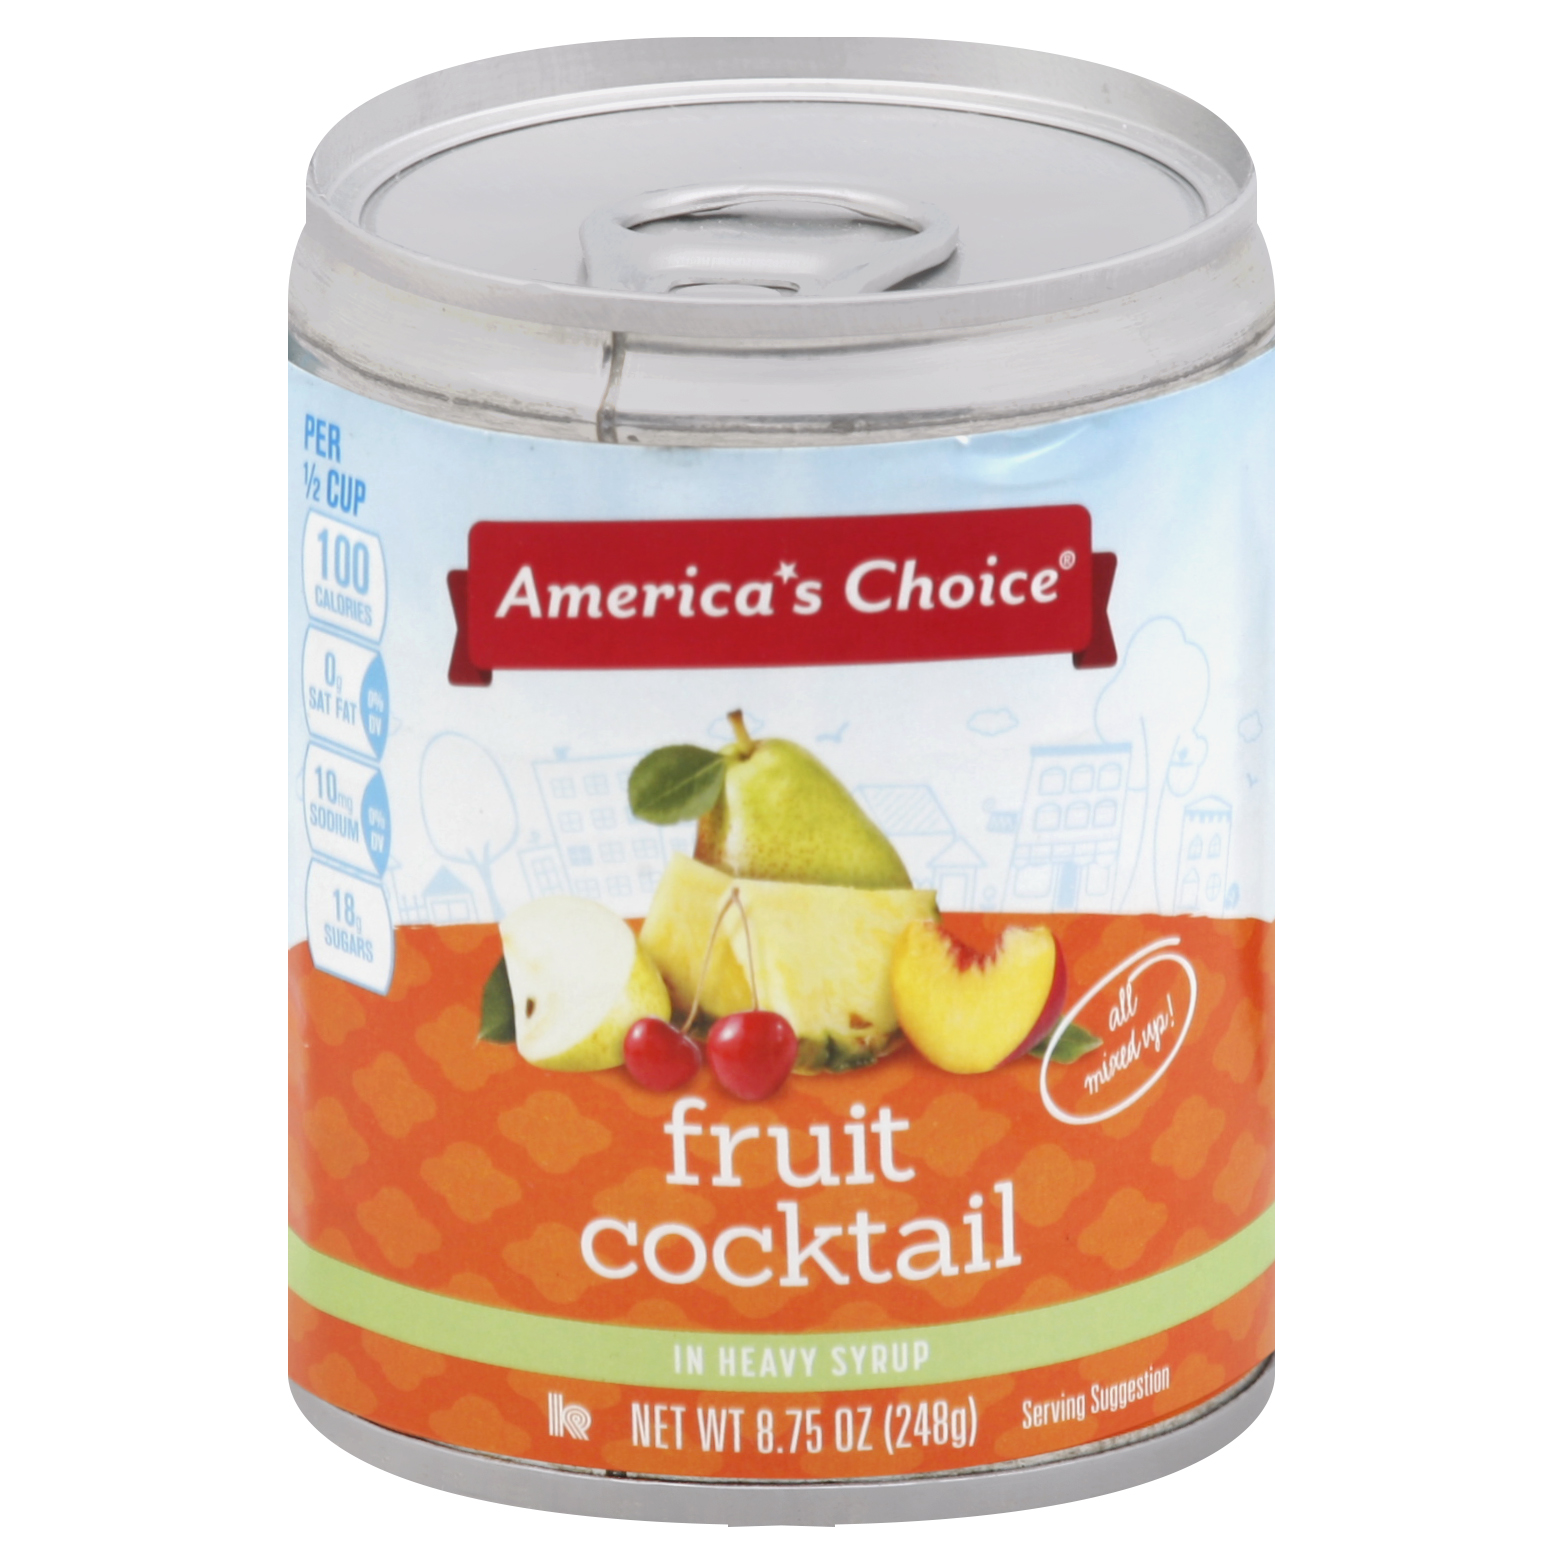 America's Choice Fruit Cocktail 8.75 Oz image